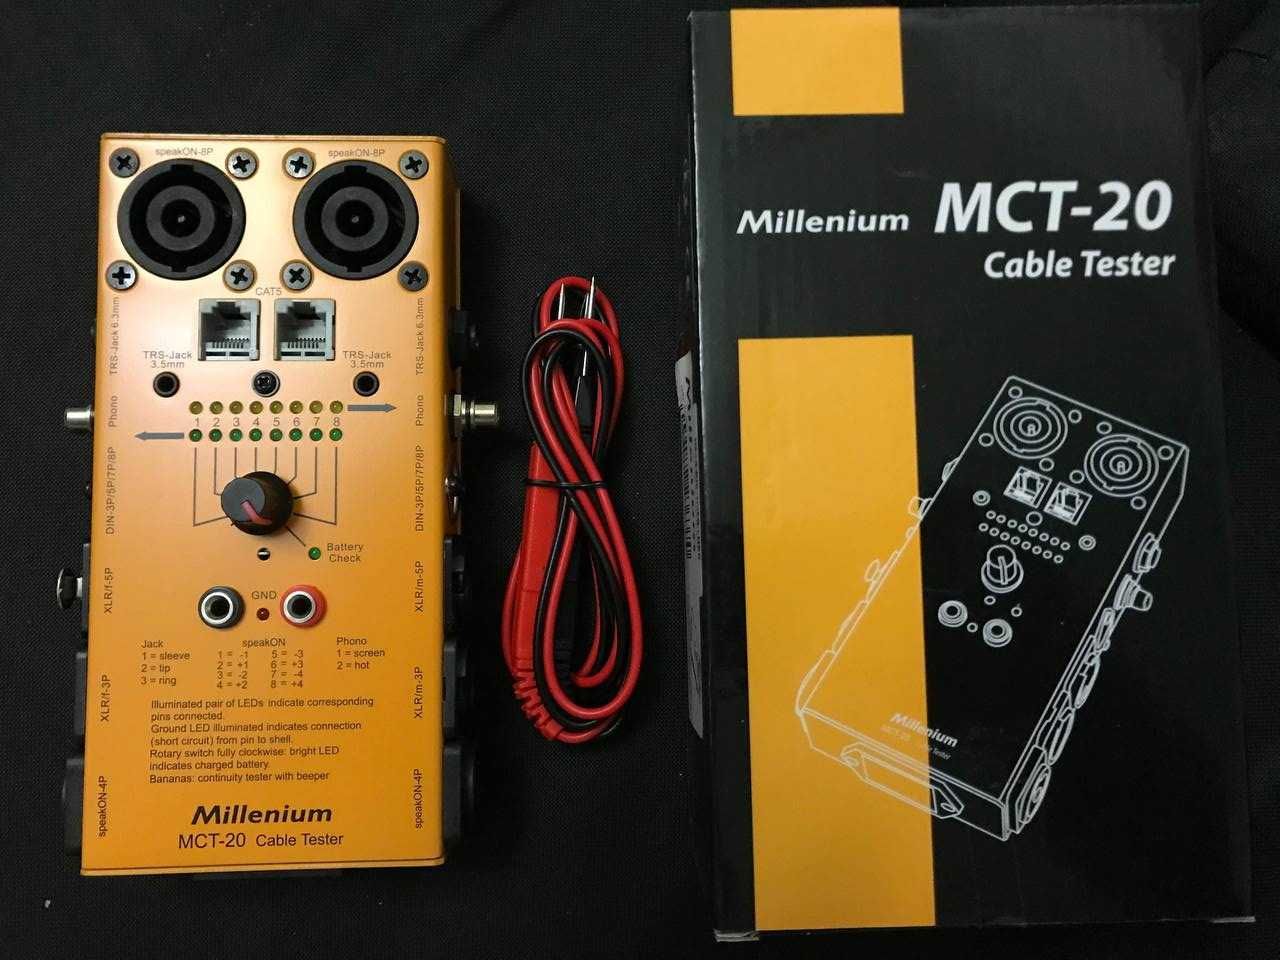 Millenium MCT-20 Професійний кабельний тестер XLR, Jack, RCA, CAT5